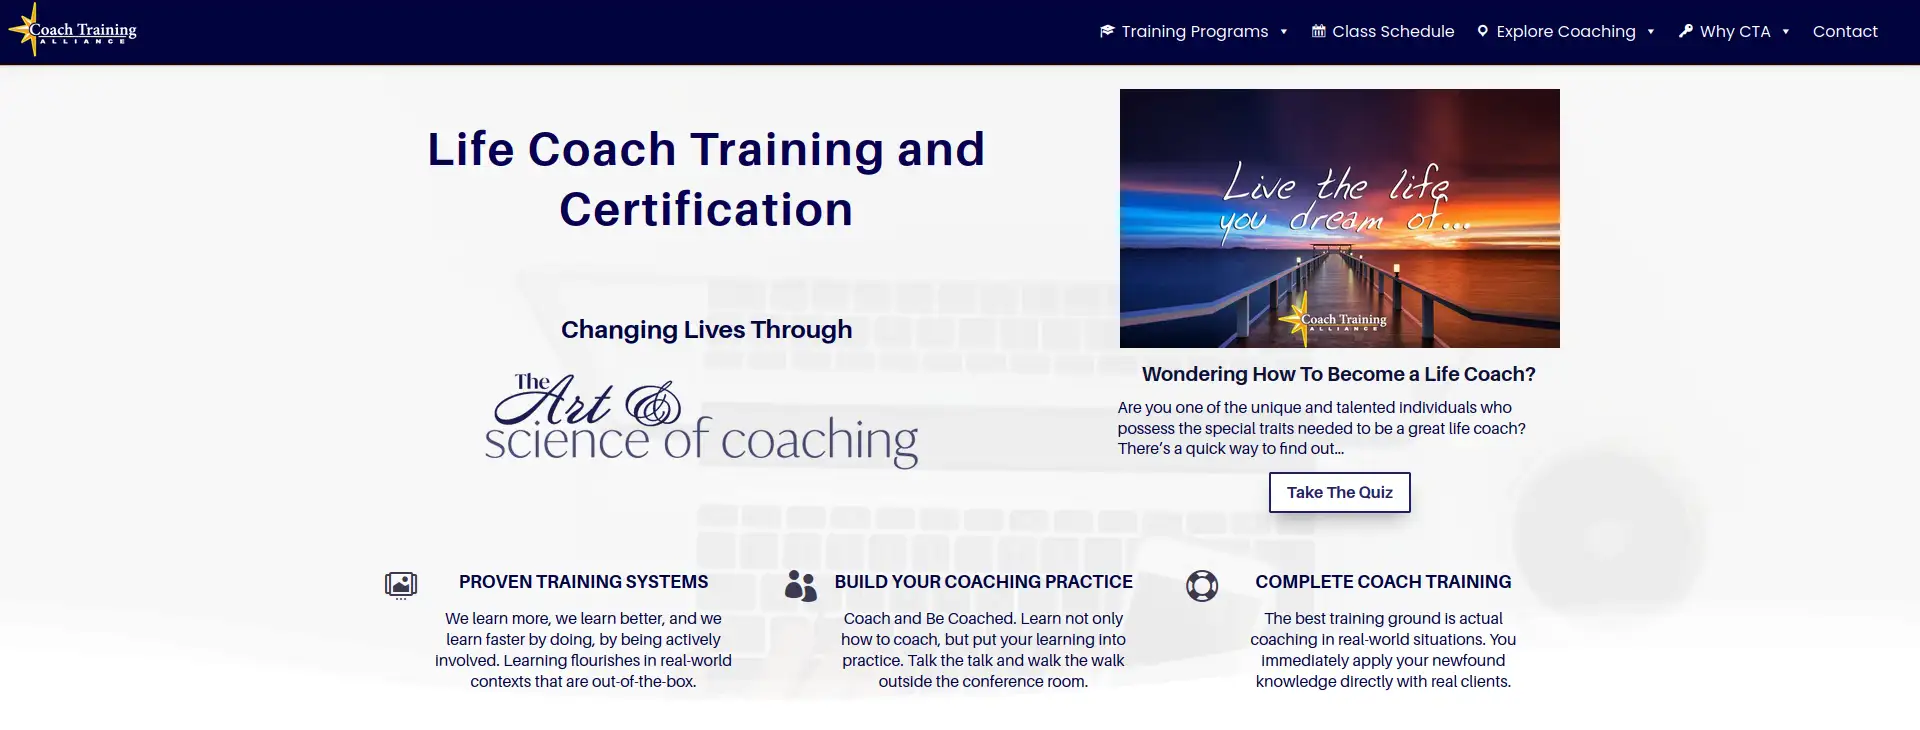 best-education-affiliate-programs-coach-training-alliance